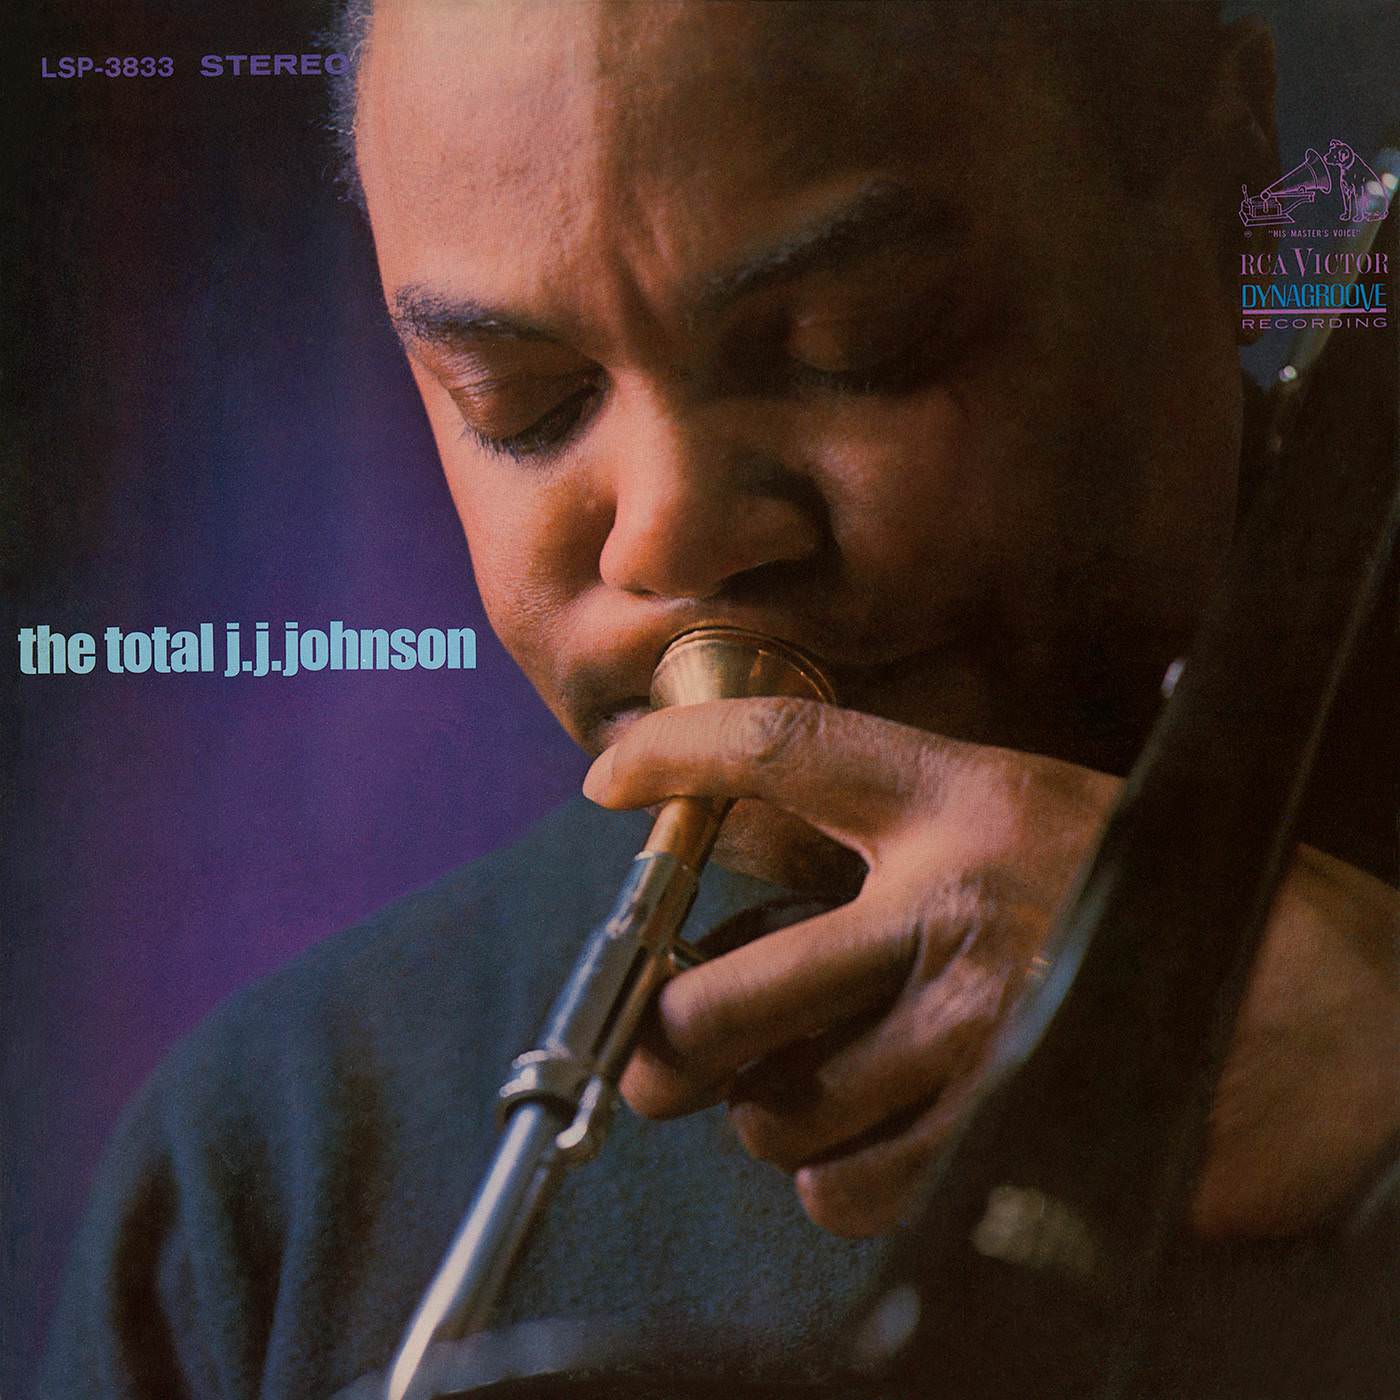 J.J. Johnson - The Total J.J. Johnson (1967/2017) [AcousticSounds FLAC 24bit/192kHz]